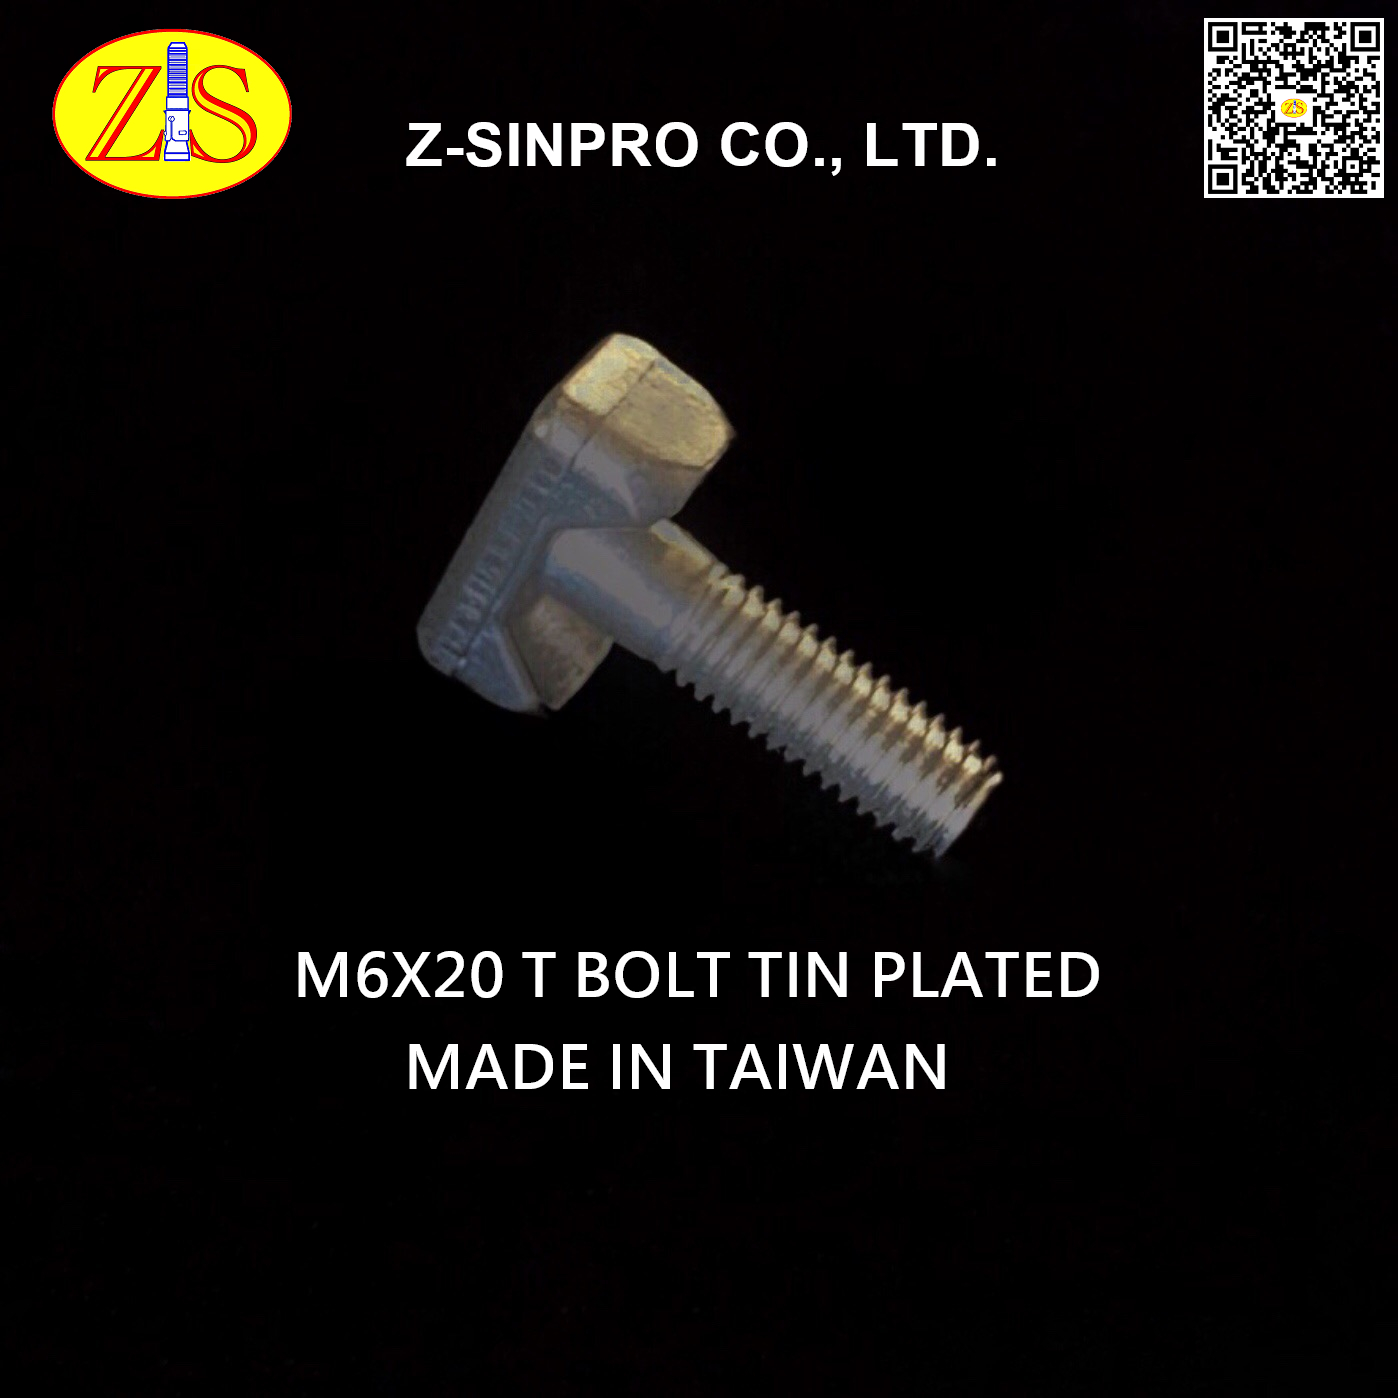 M6X20 Bolt, Special Bolt, Special T Bolt Tin Plated Taiwan Manufacturer